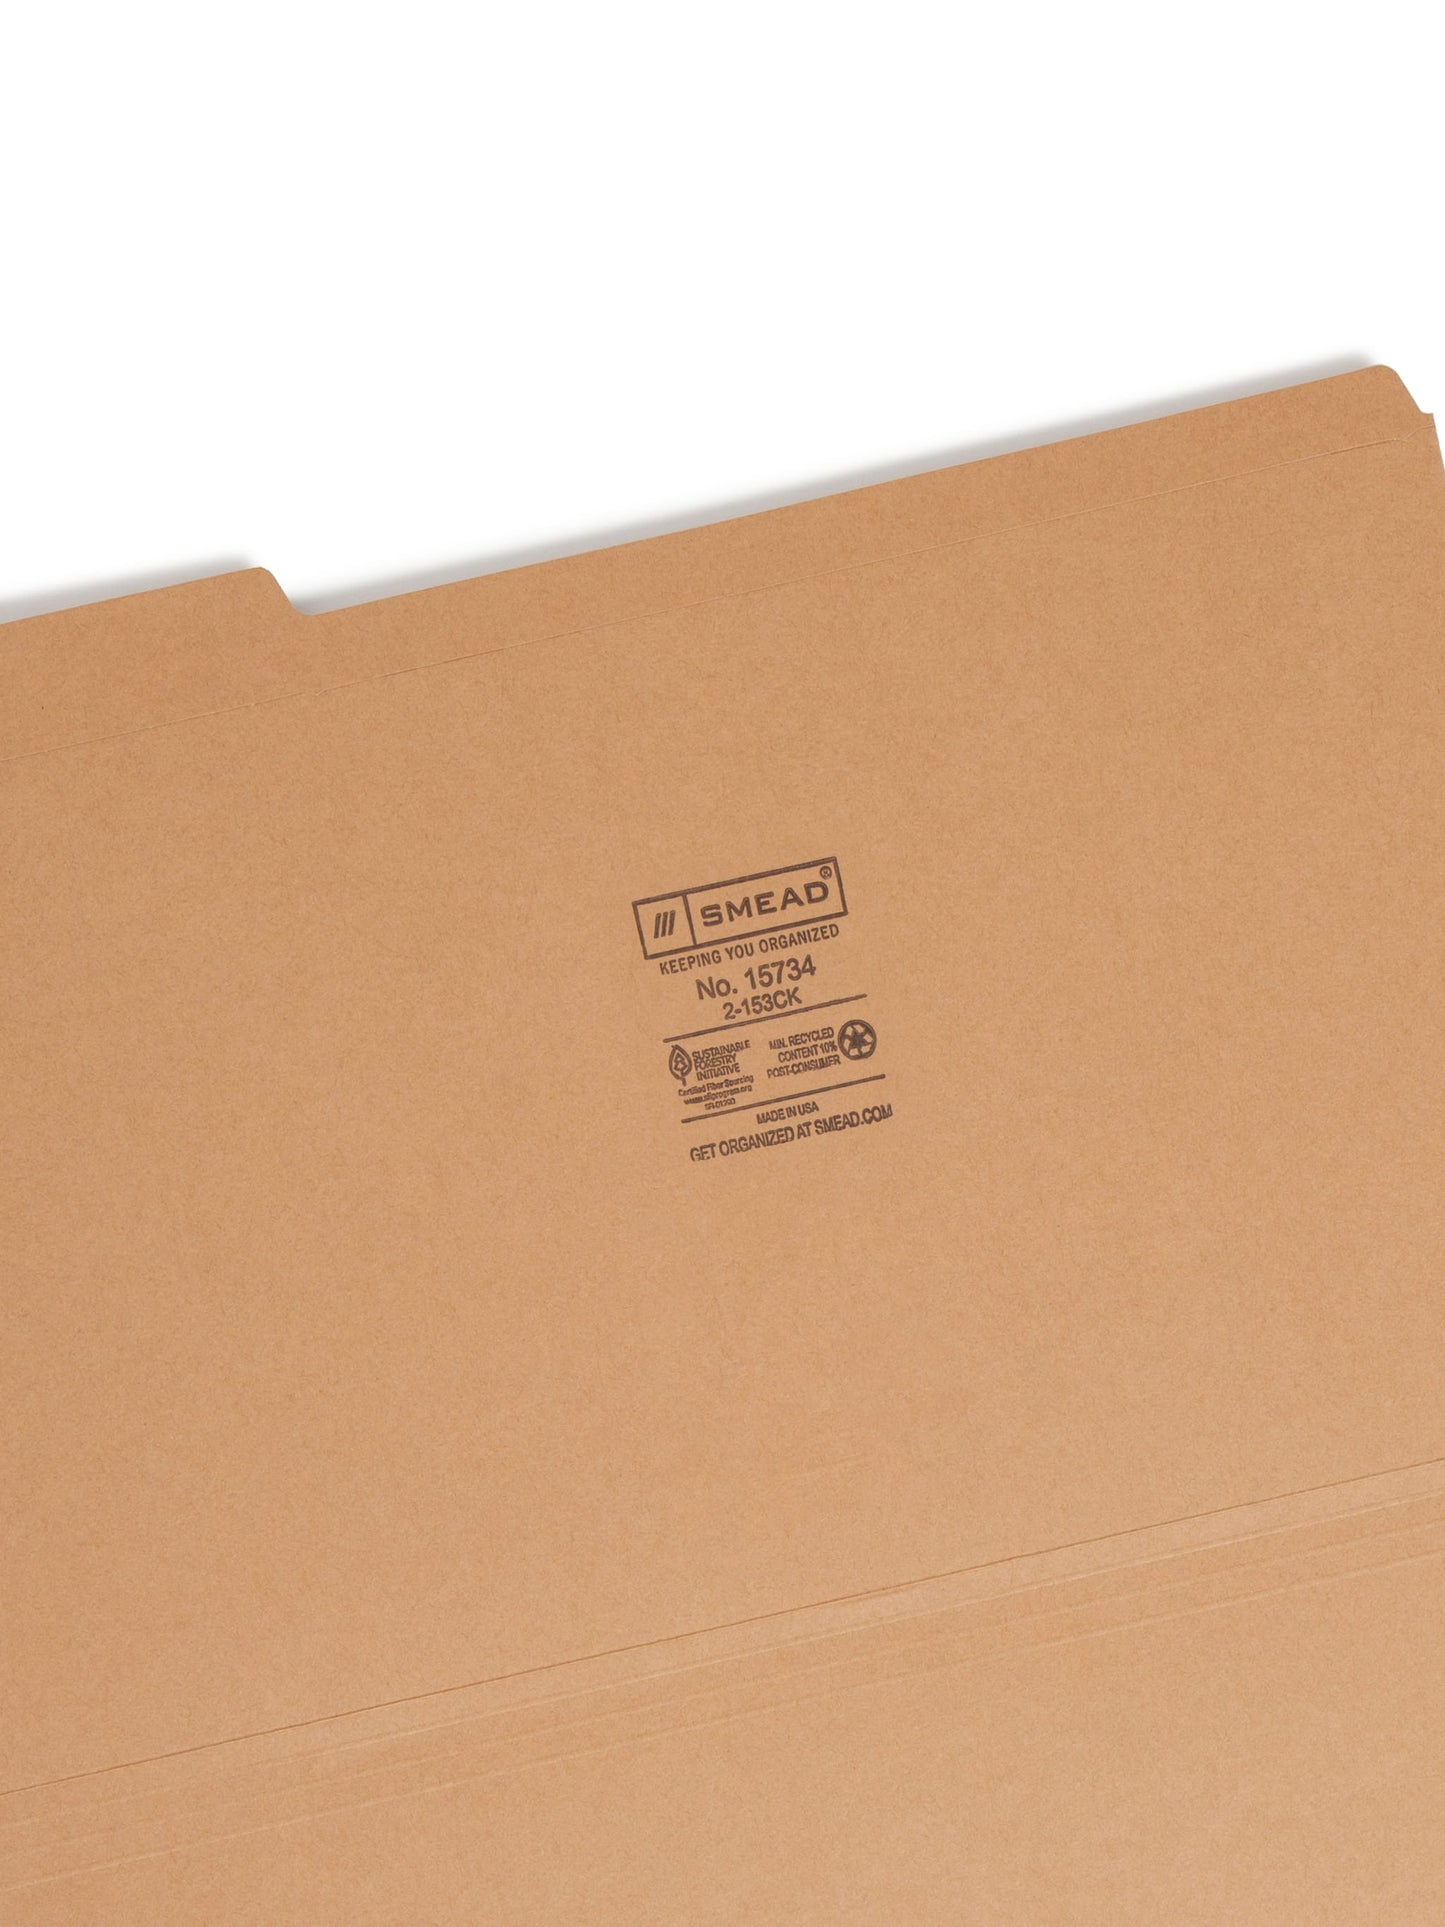 Reinforced Tab File Folders, 1/3-Cut Tab, Kraft Color, Legal Size, Set of 100, 086486157346